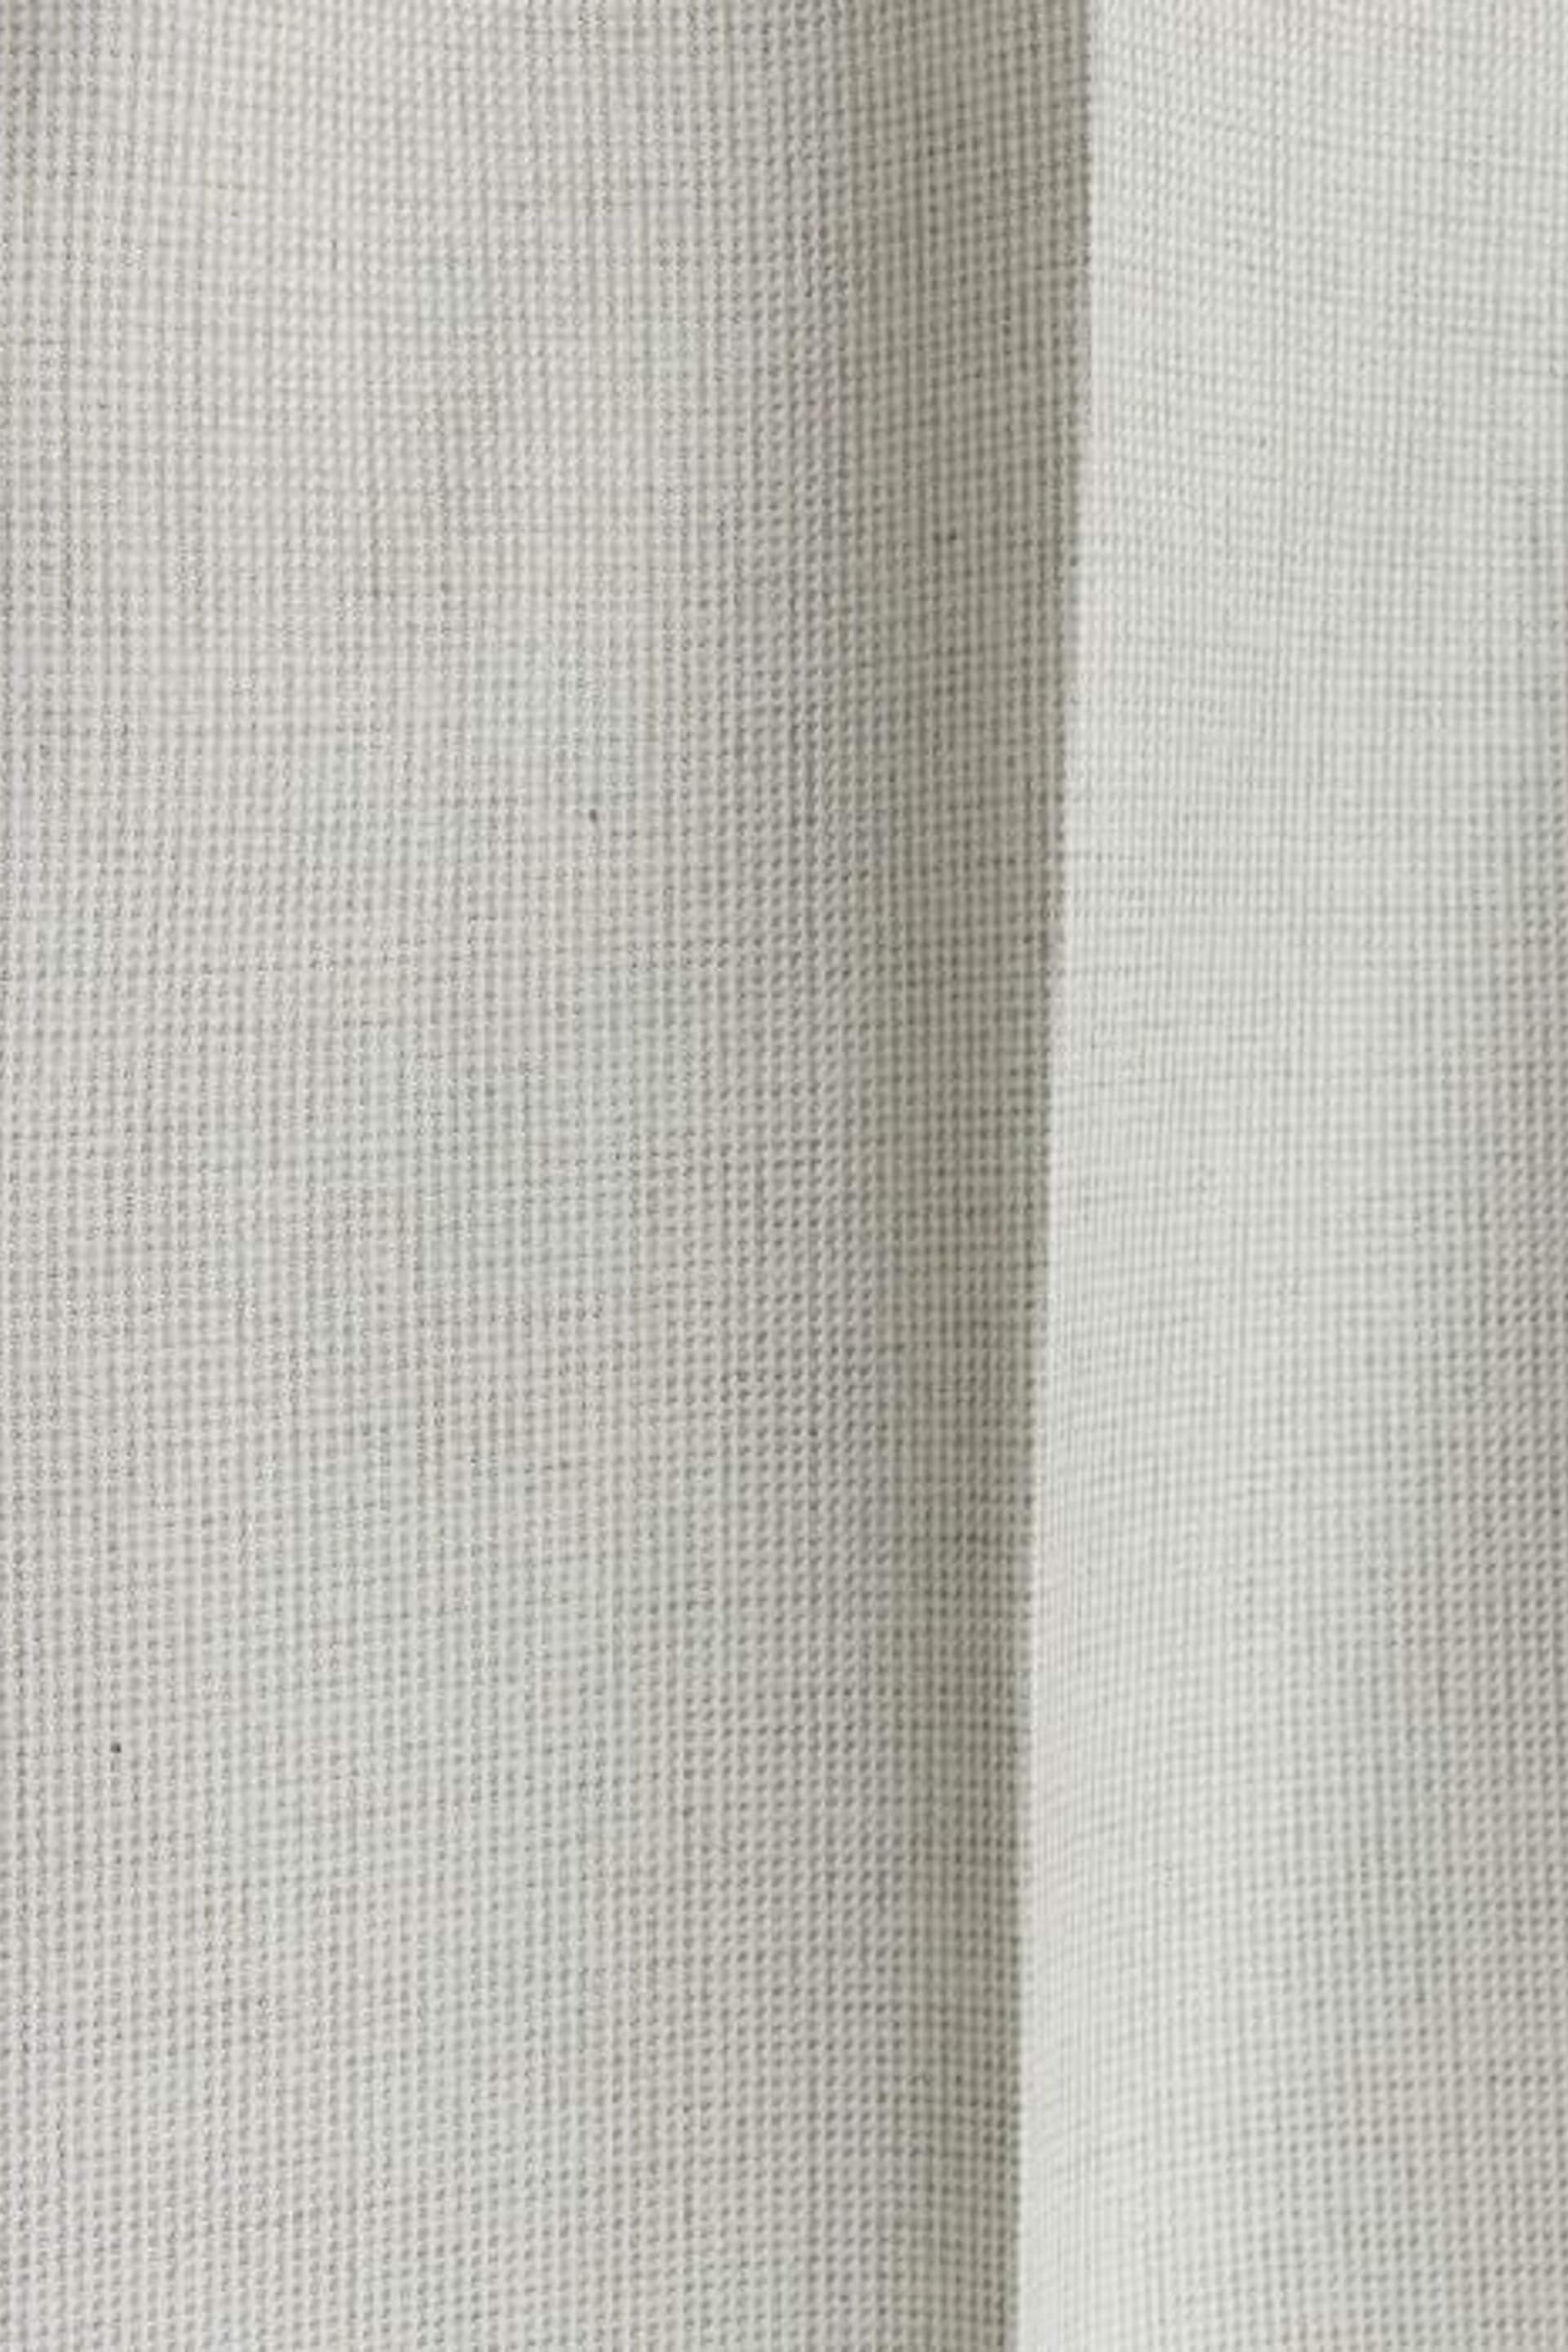 River Island Cream Ecru Dobbie Slim Fit Texture Suit Trousers - Image 6 of 6